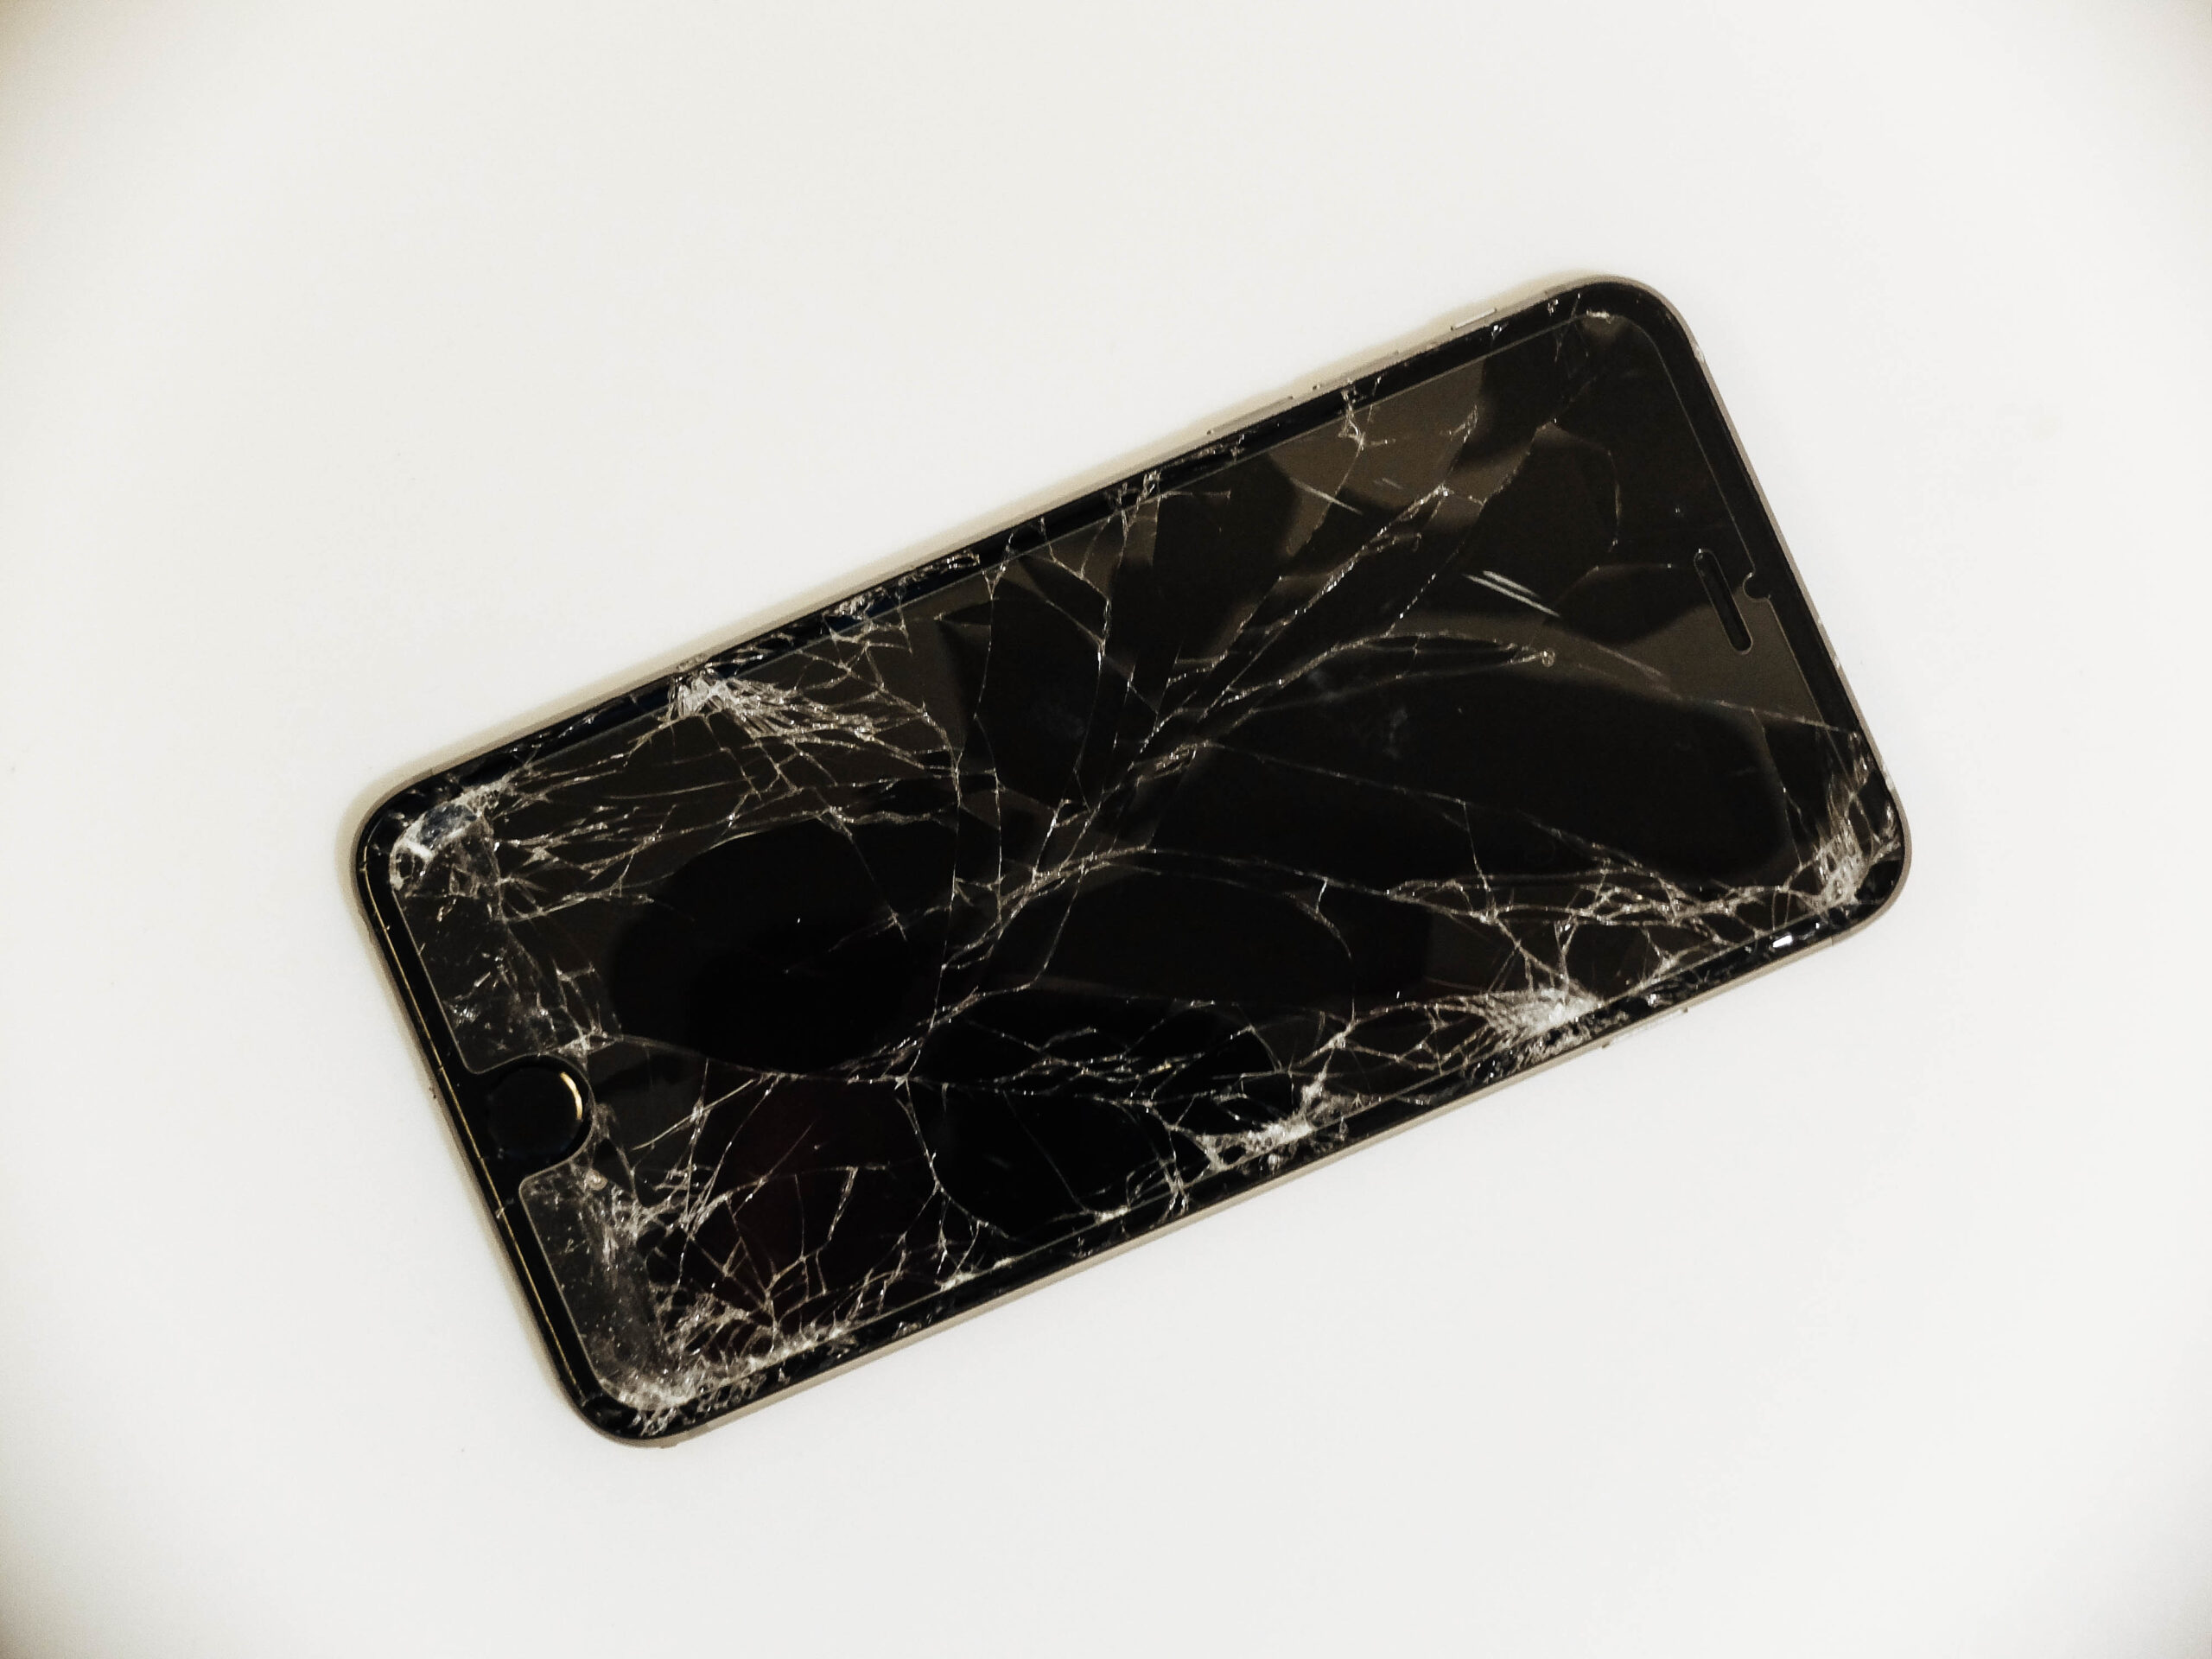 IT Shop Currimundi broken mobile phone